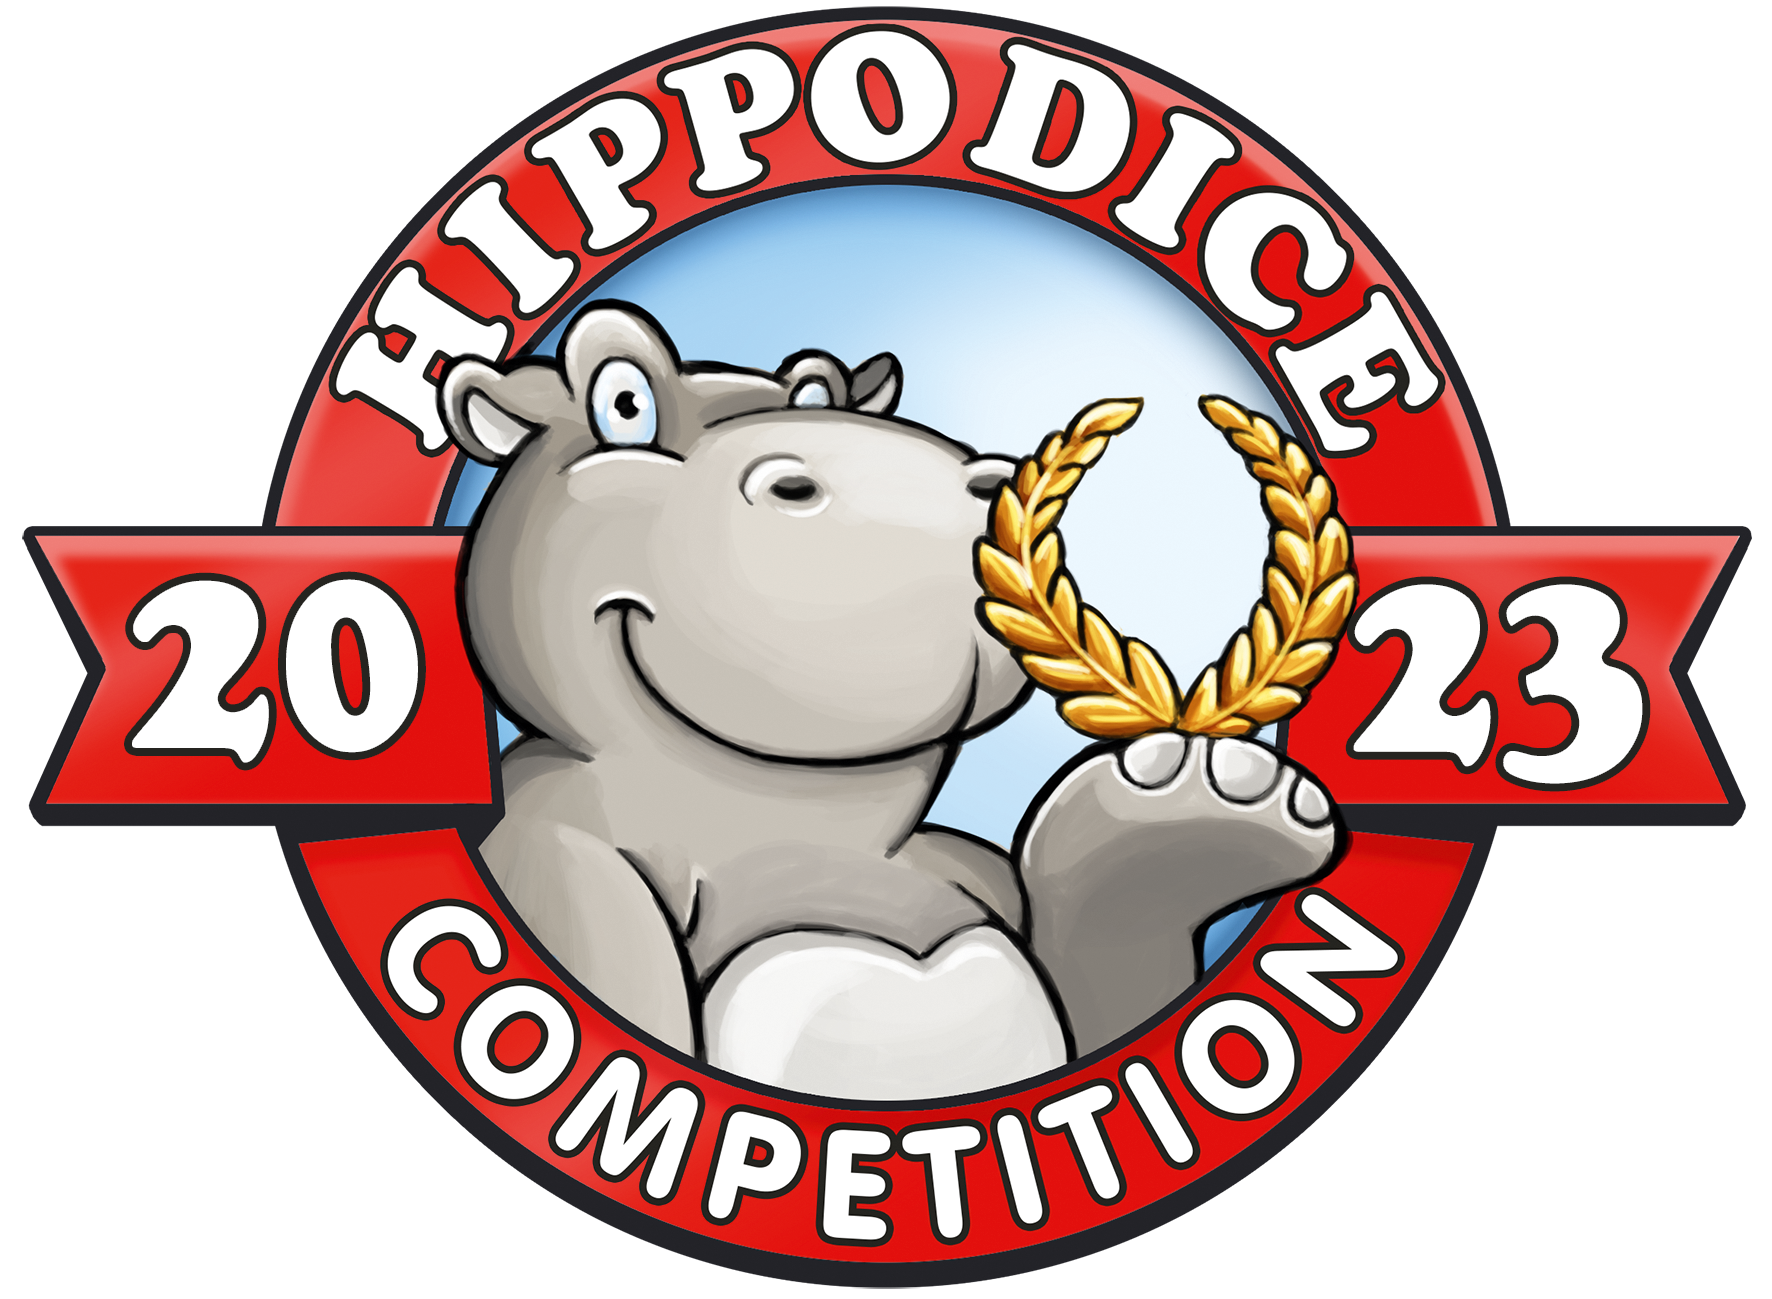 Hippodice Autorenwettbewerb / Hippodice Game Designer Competition